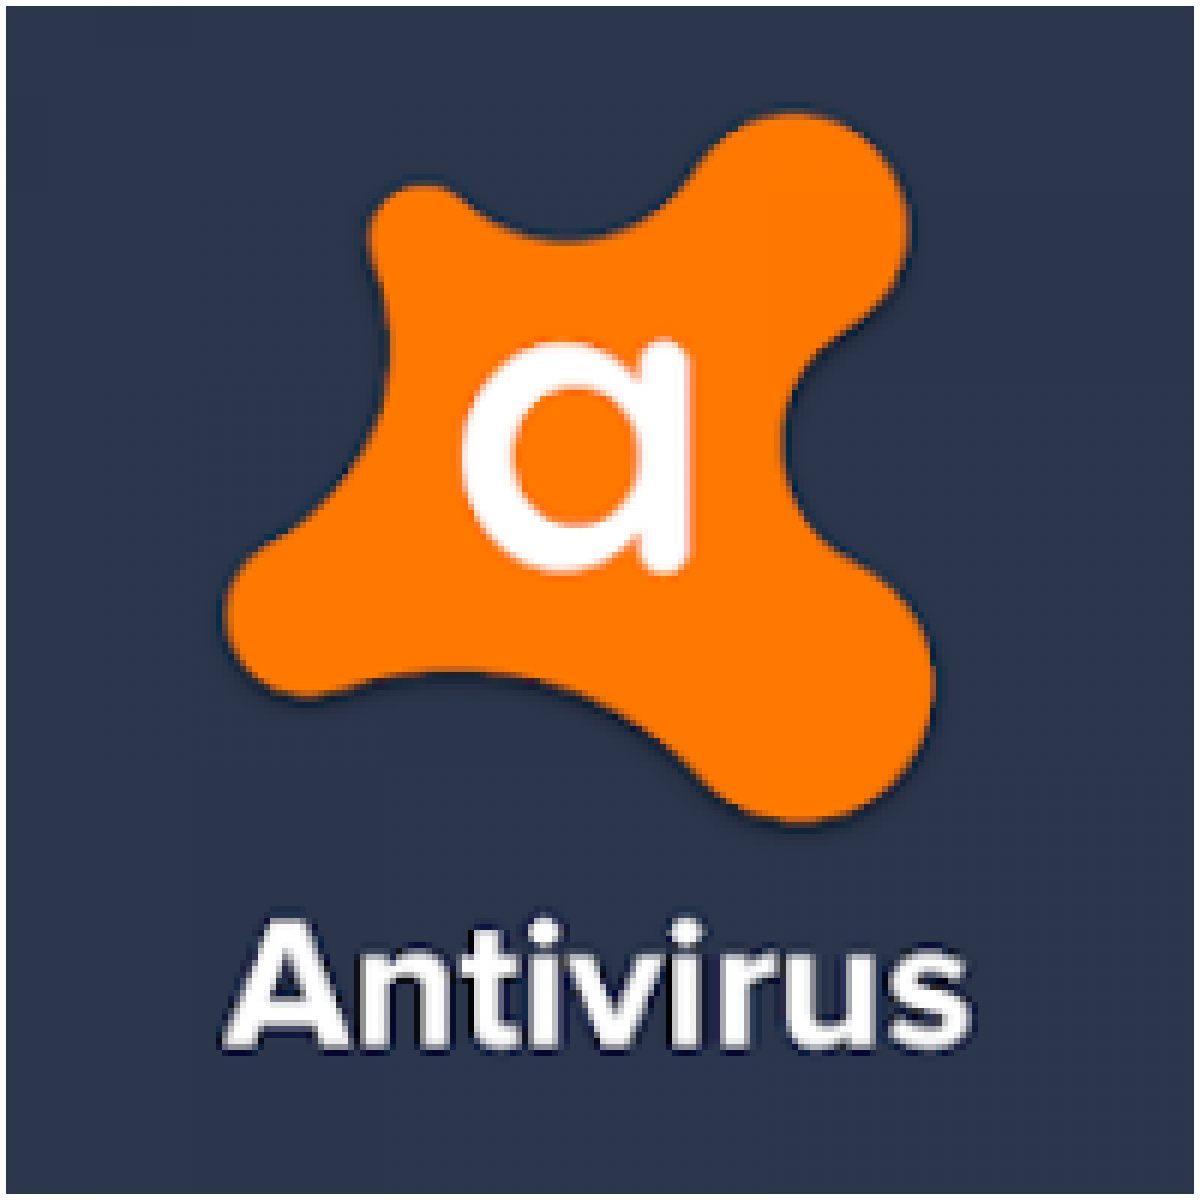 download avast free antivirus for windows 10 64 bit